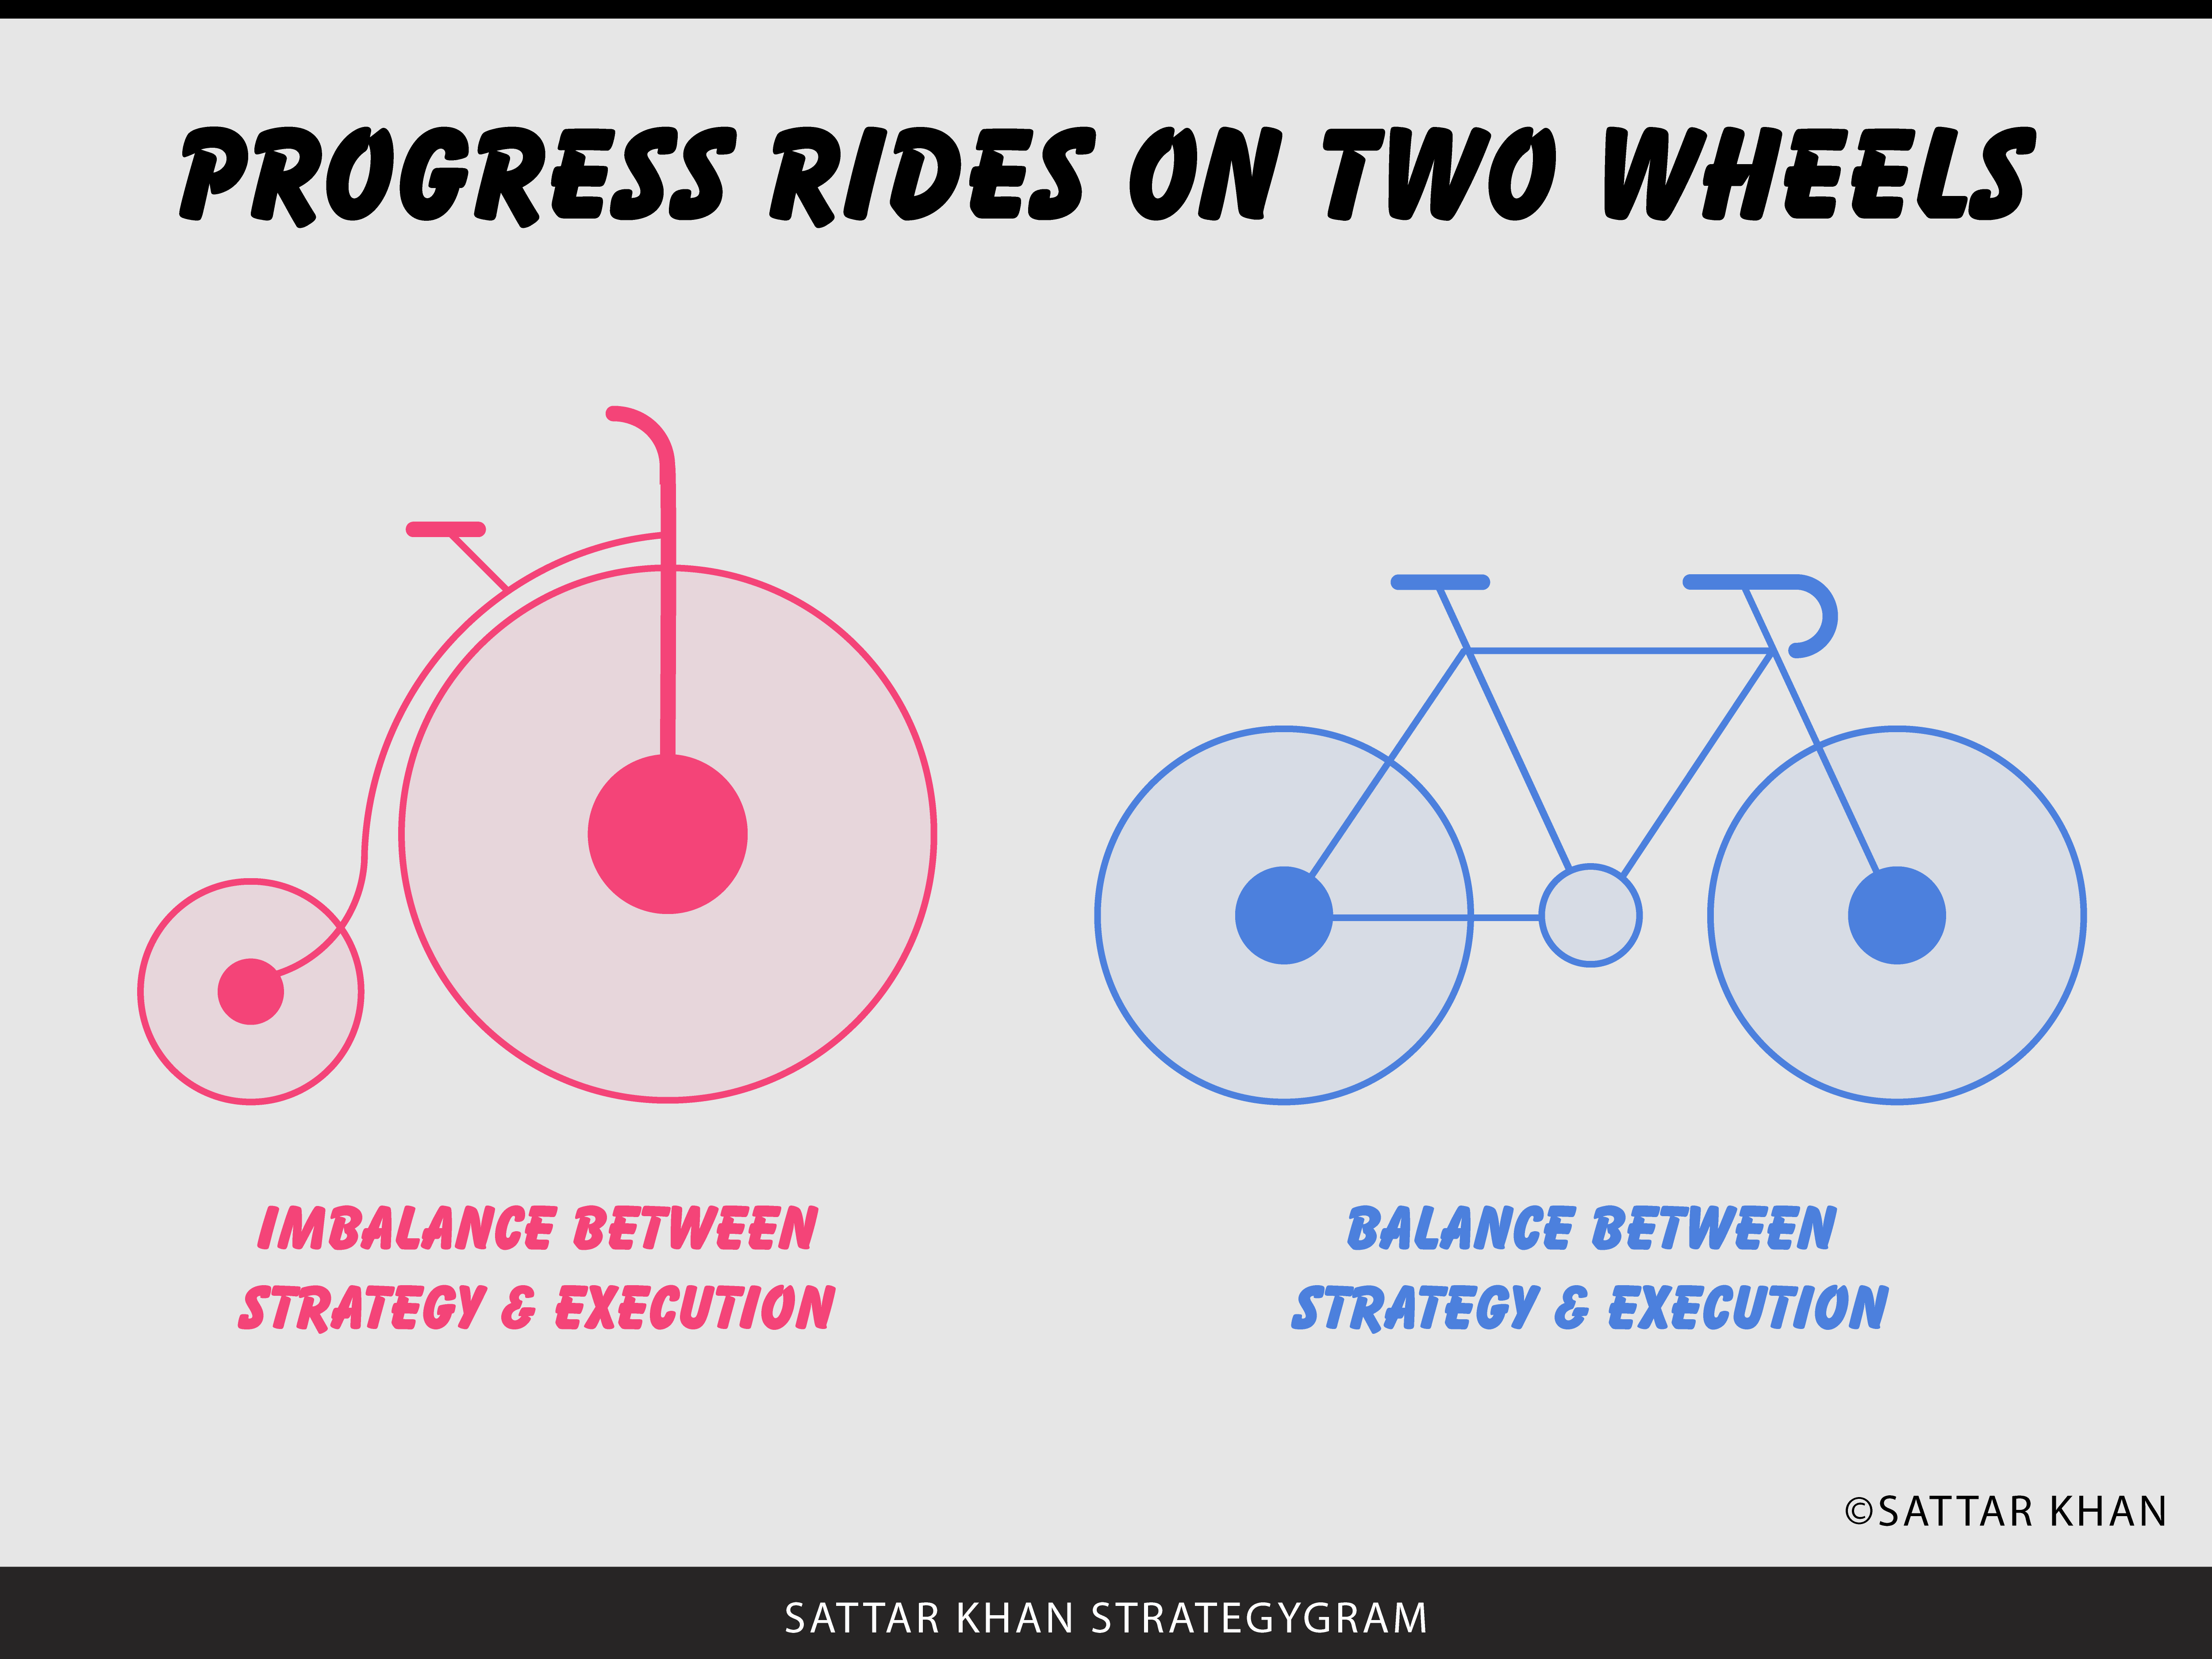  Strategygram: Progress rides on two wheels